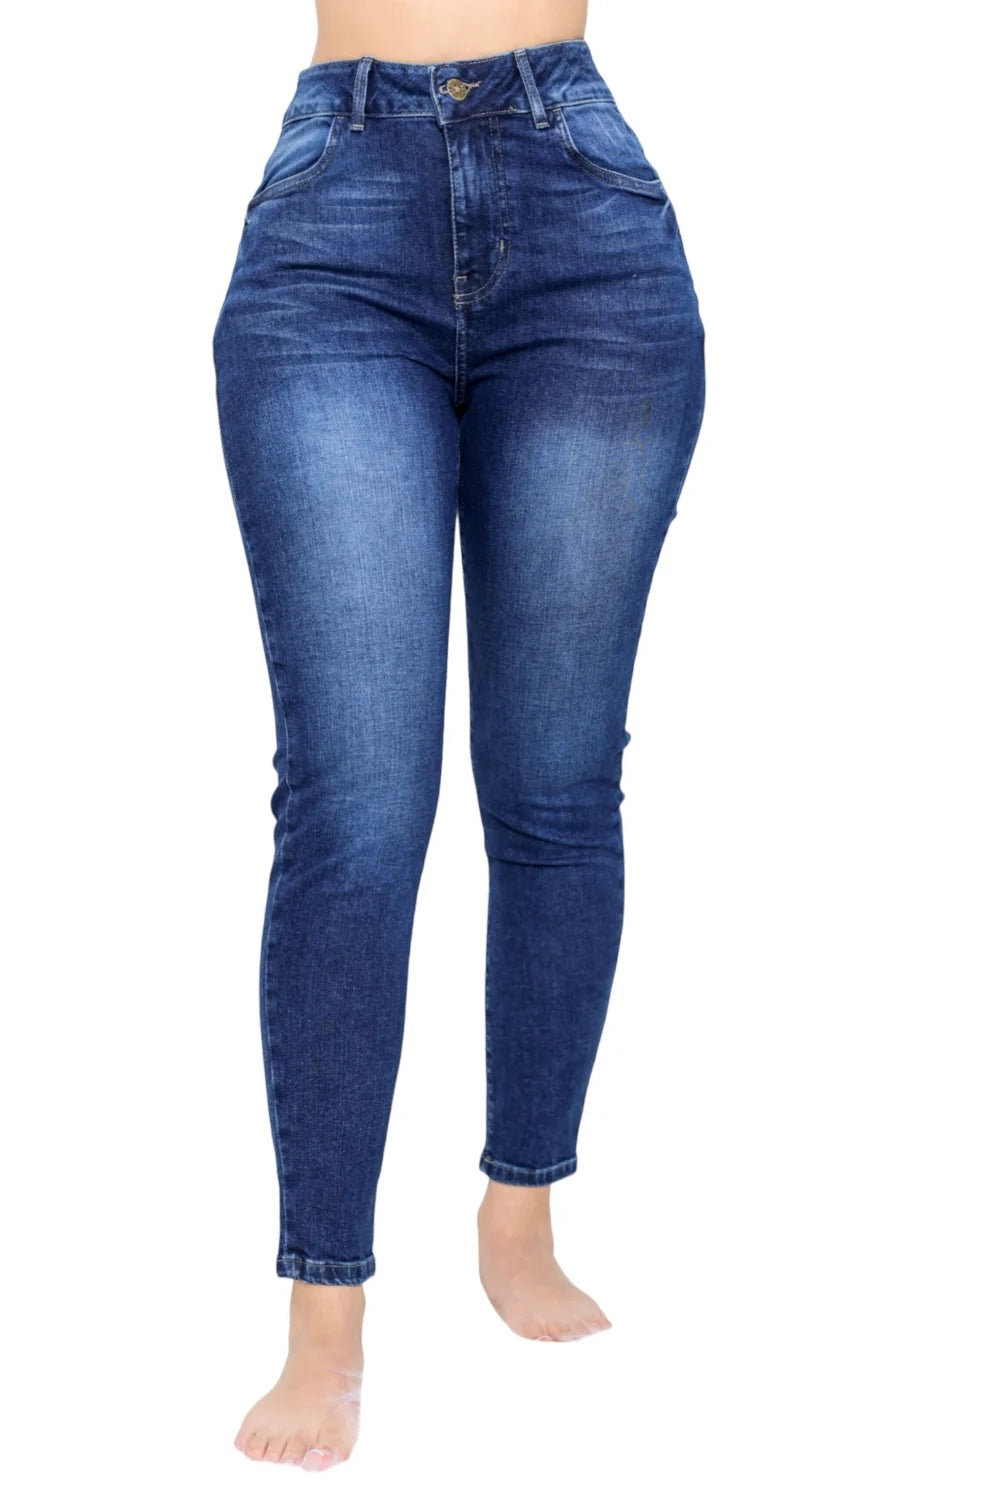 Jeans Premium Skinny